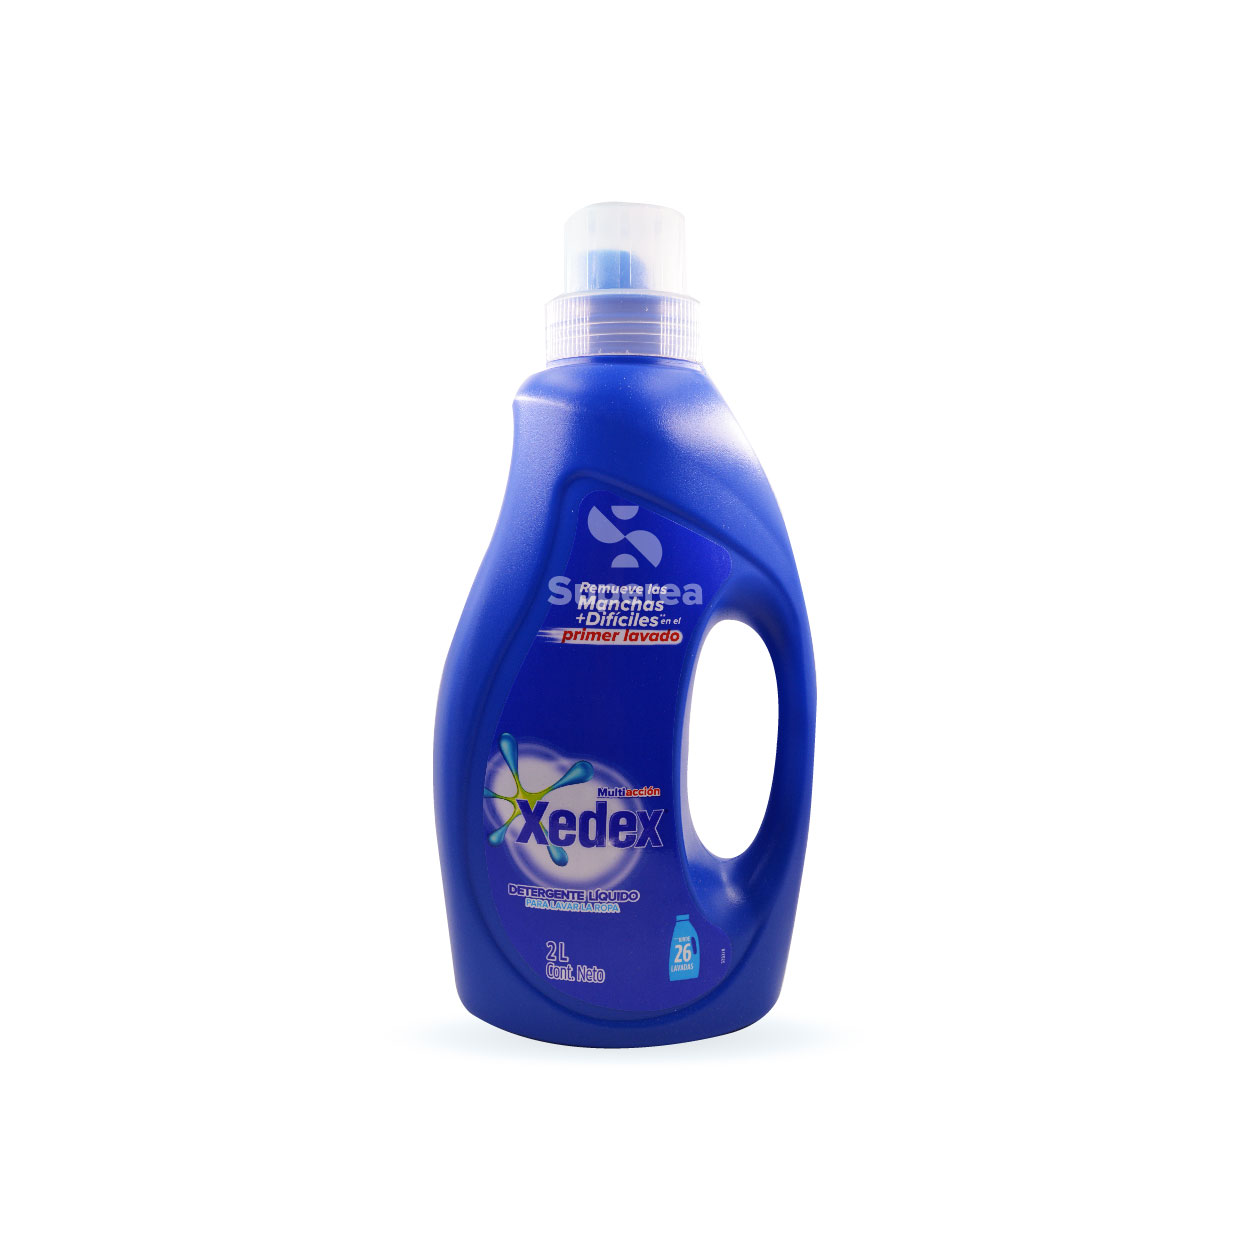 ARIEL Detergente en polvo para ropa 500G Aroma Original 3-Pack